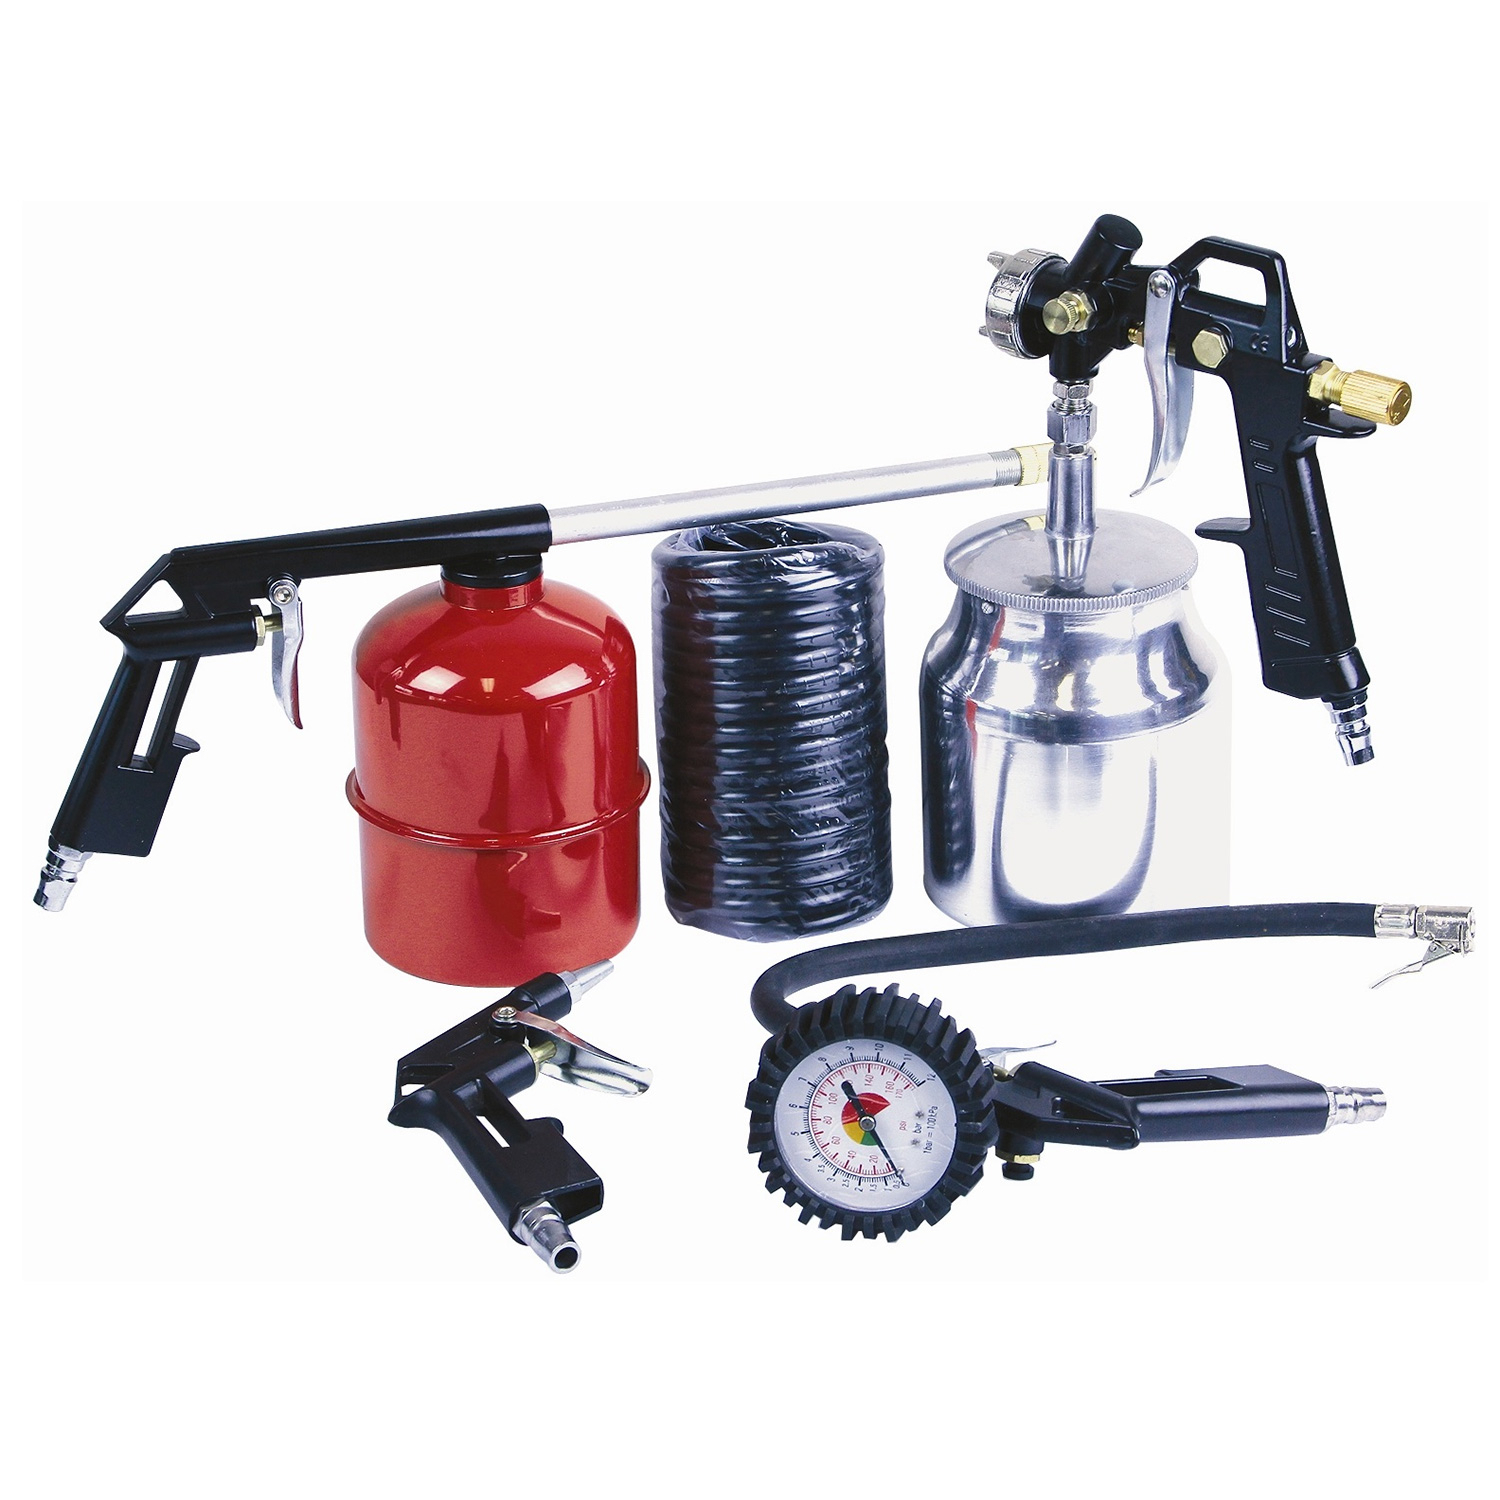 5 Pc Piece Compressor Air Accessory Tool Kit Gun Hose Gravity Spray UK 